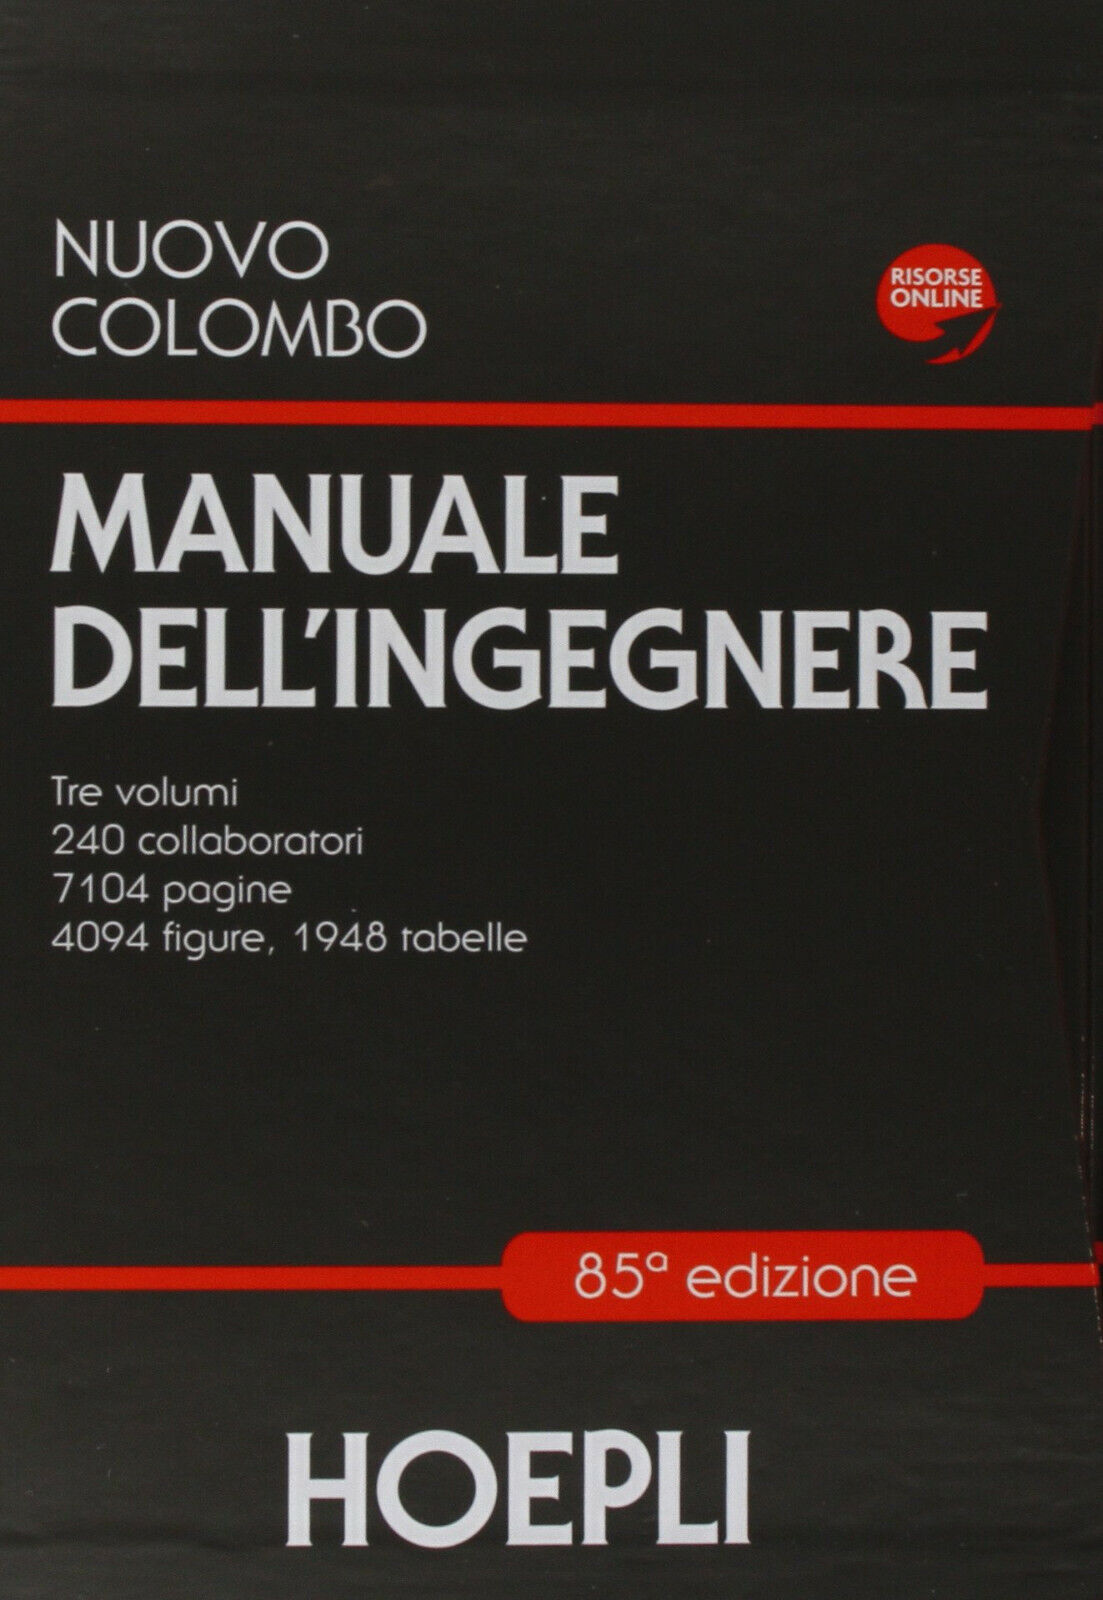 Nuovo Colombo. Manuale dell'ingegnere - Giuseppe Colombo - Hoepli, 2012